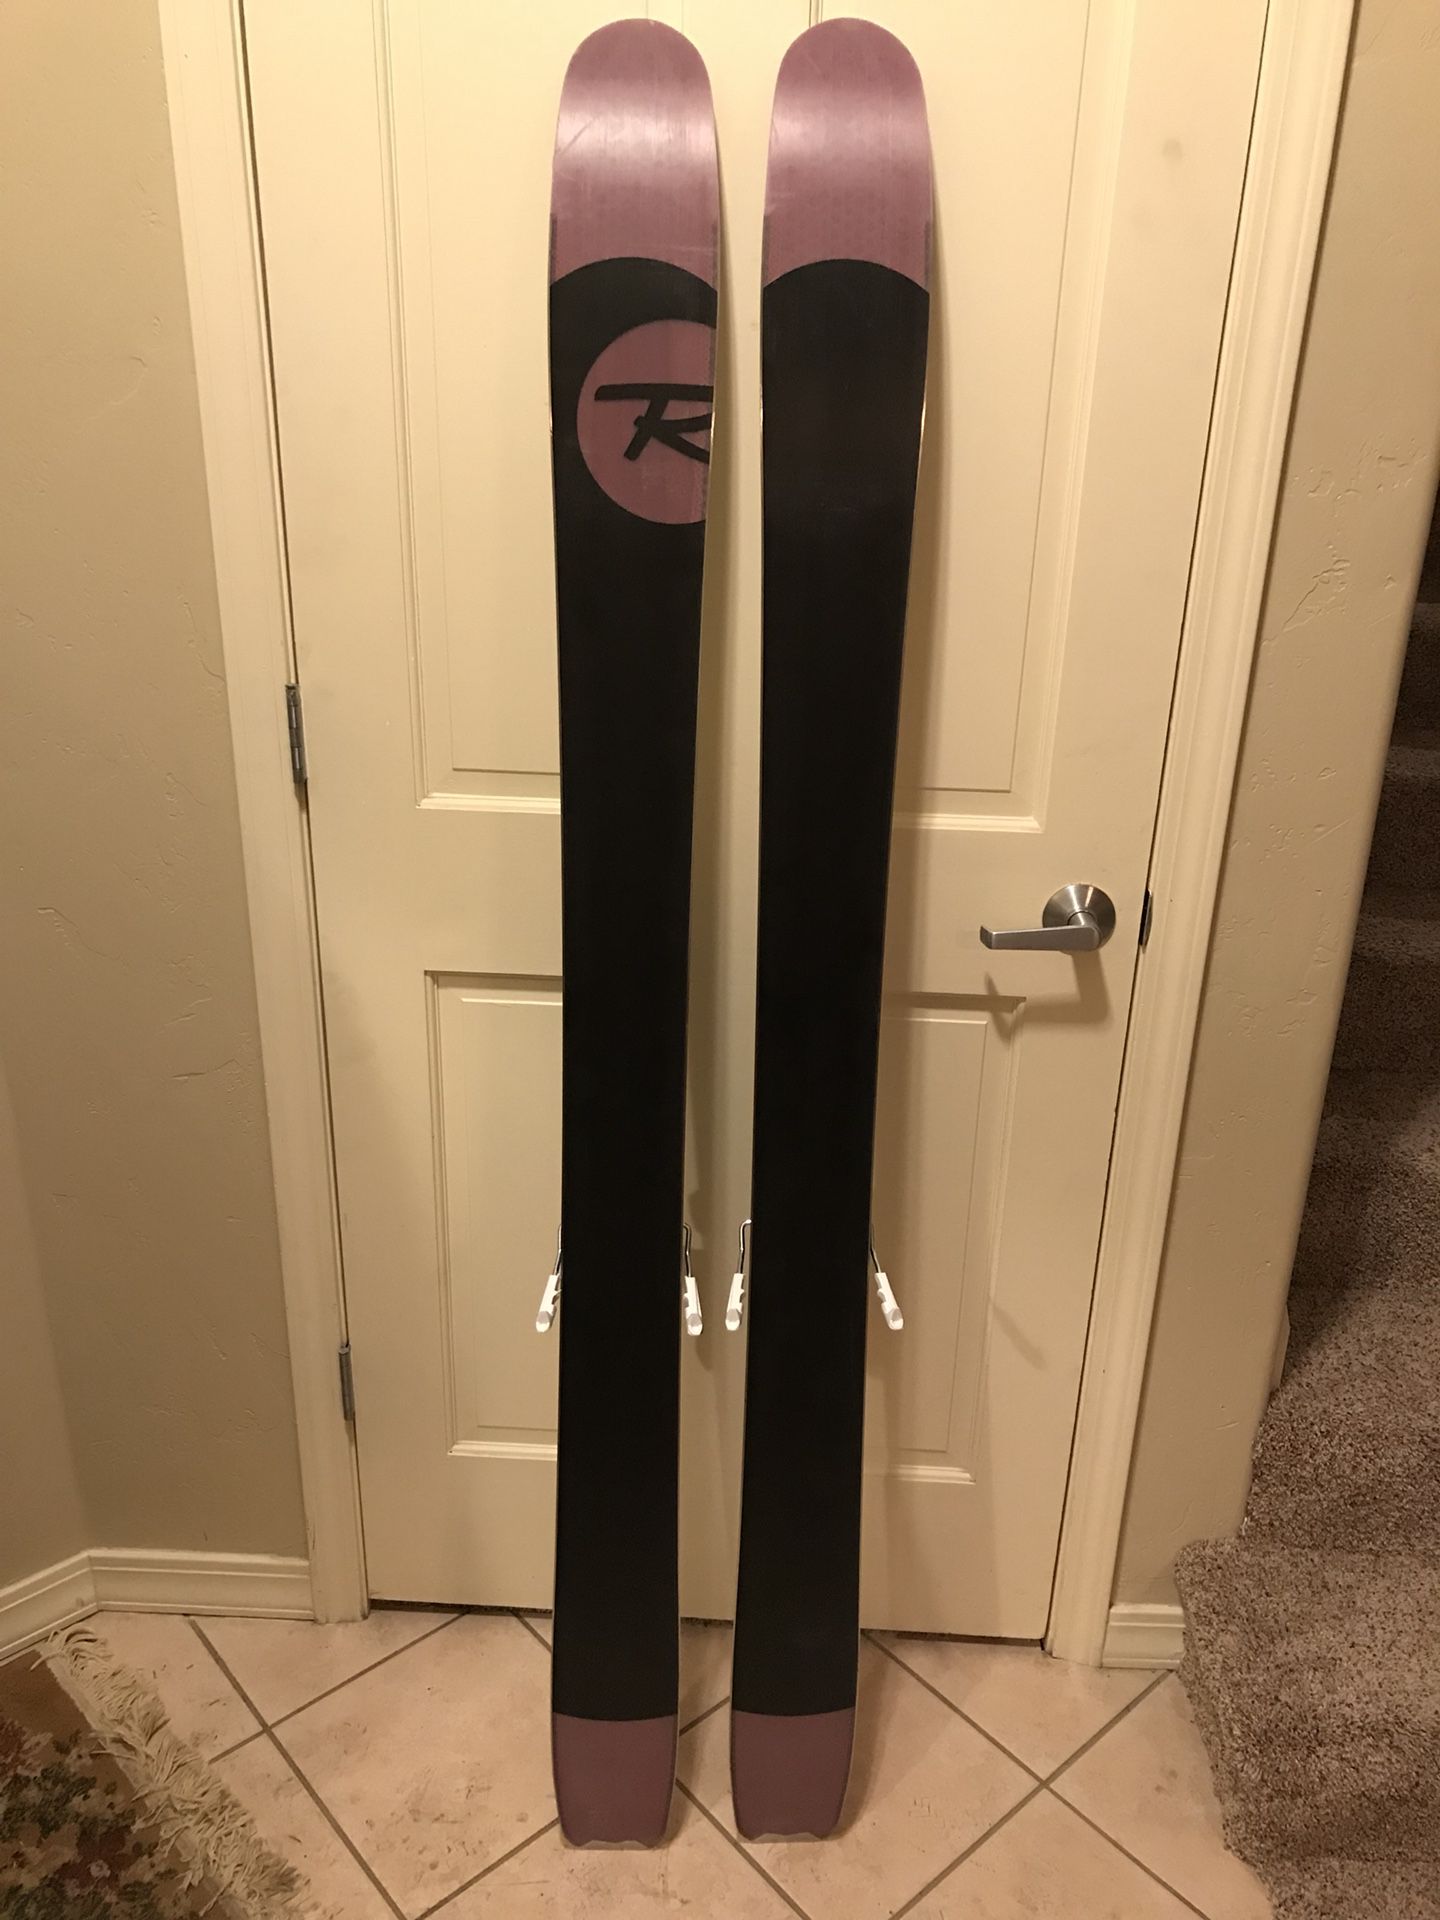 160cm rossignol scratch skis for Sale in Fremont, CA - OfferUp